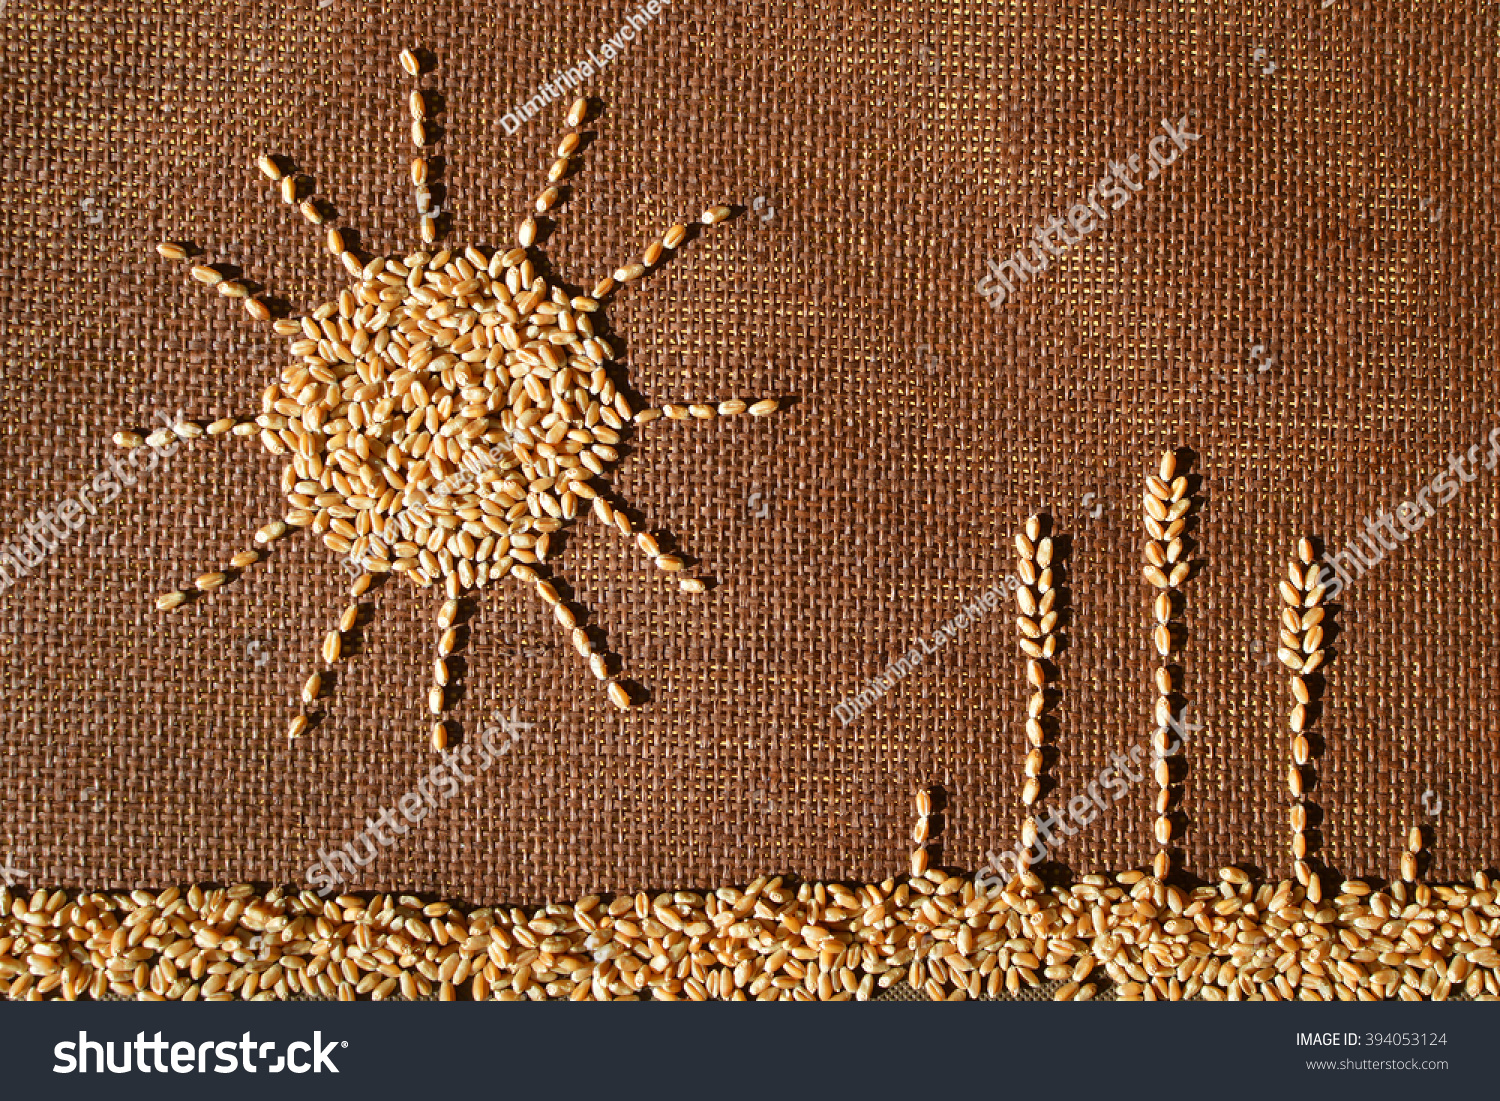 Drawn by wheat grains sun shining over wheat field #394053124